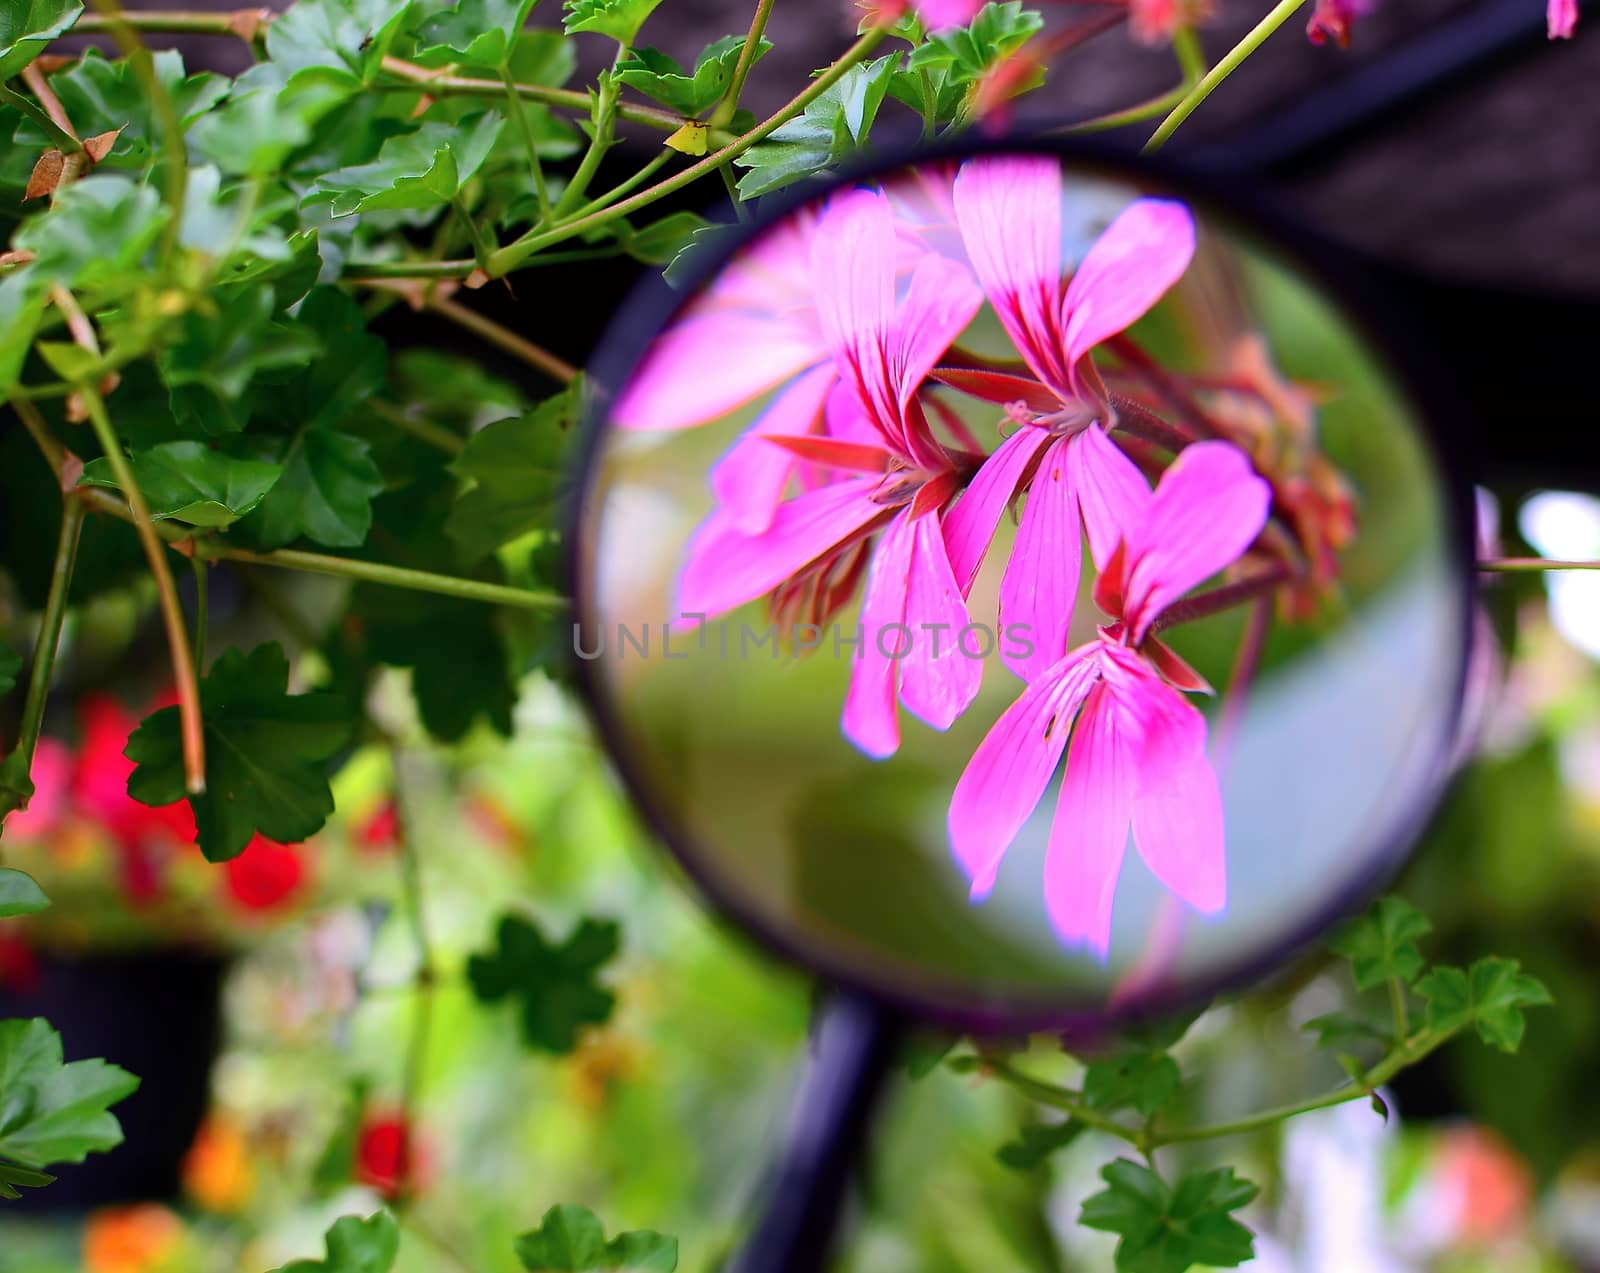 View of purple Pelargonium flower under magnifying glass.